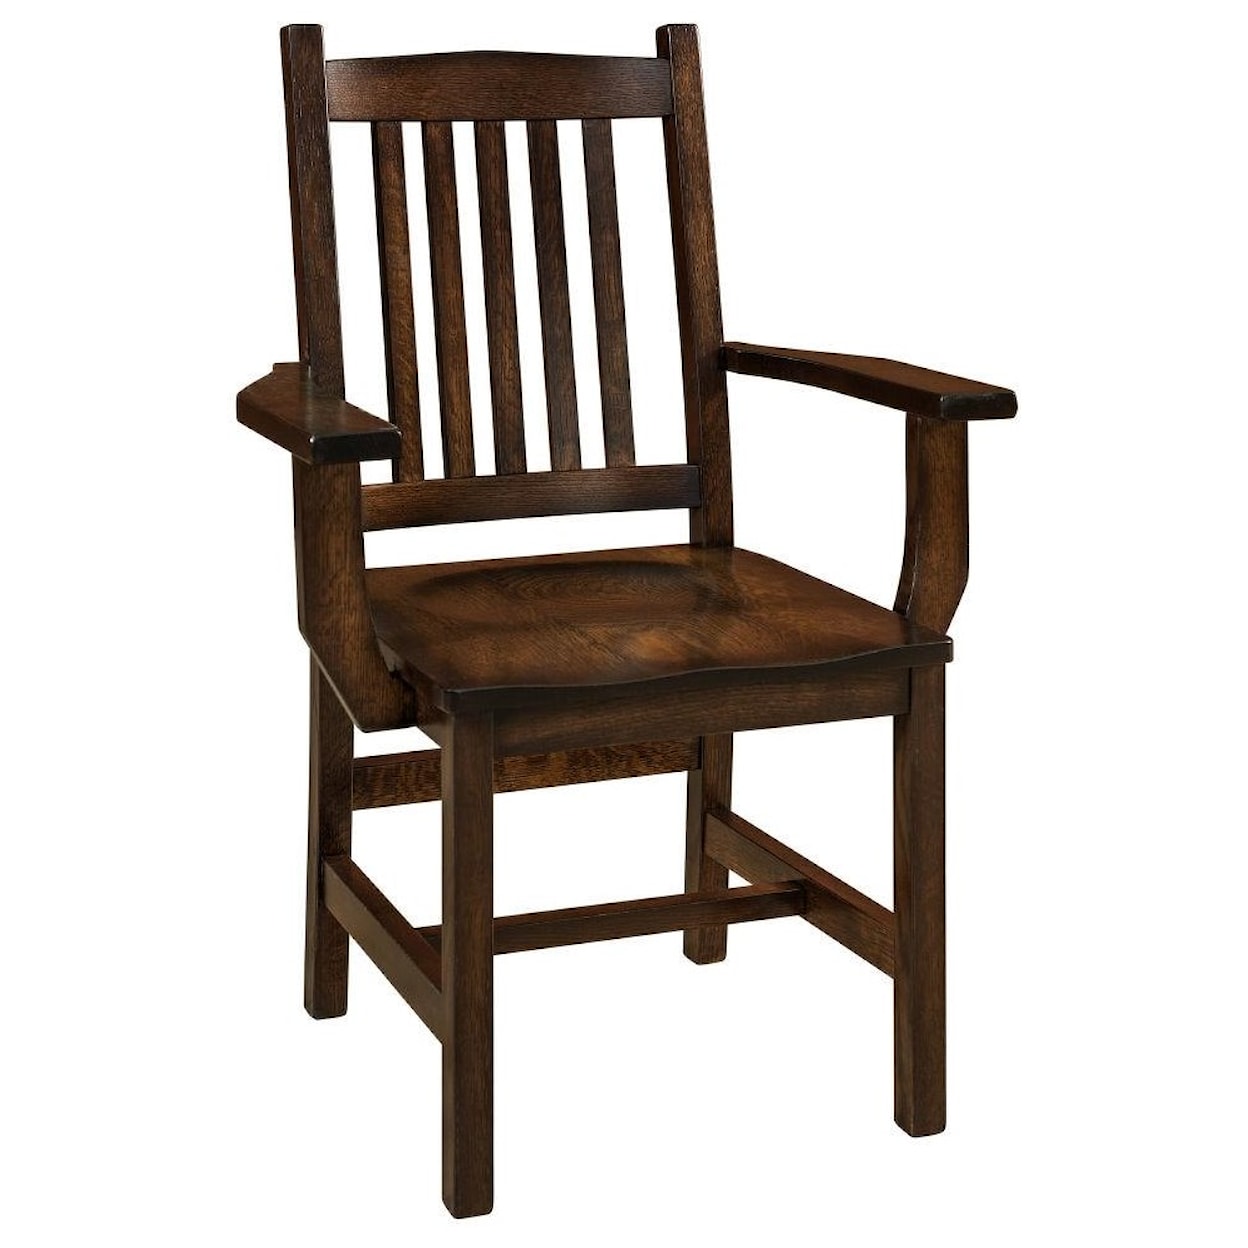 F&N Woodworking Logan Arm Chair